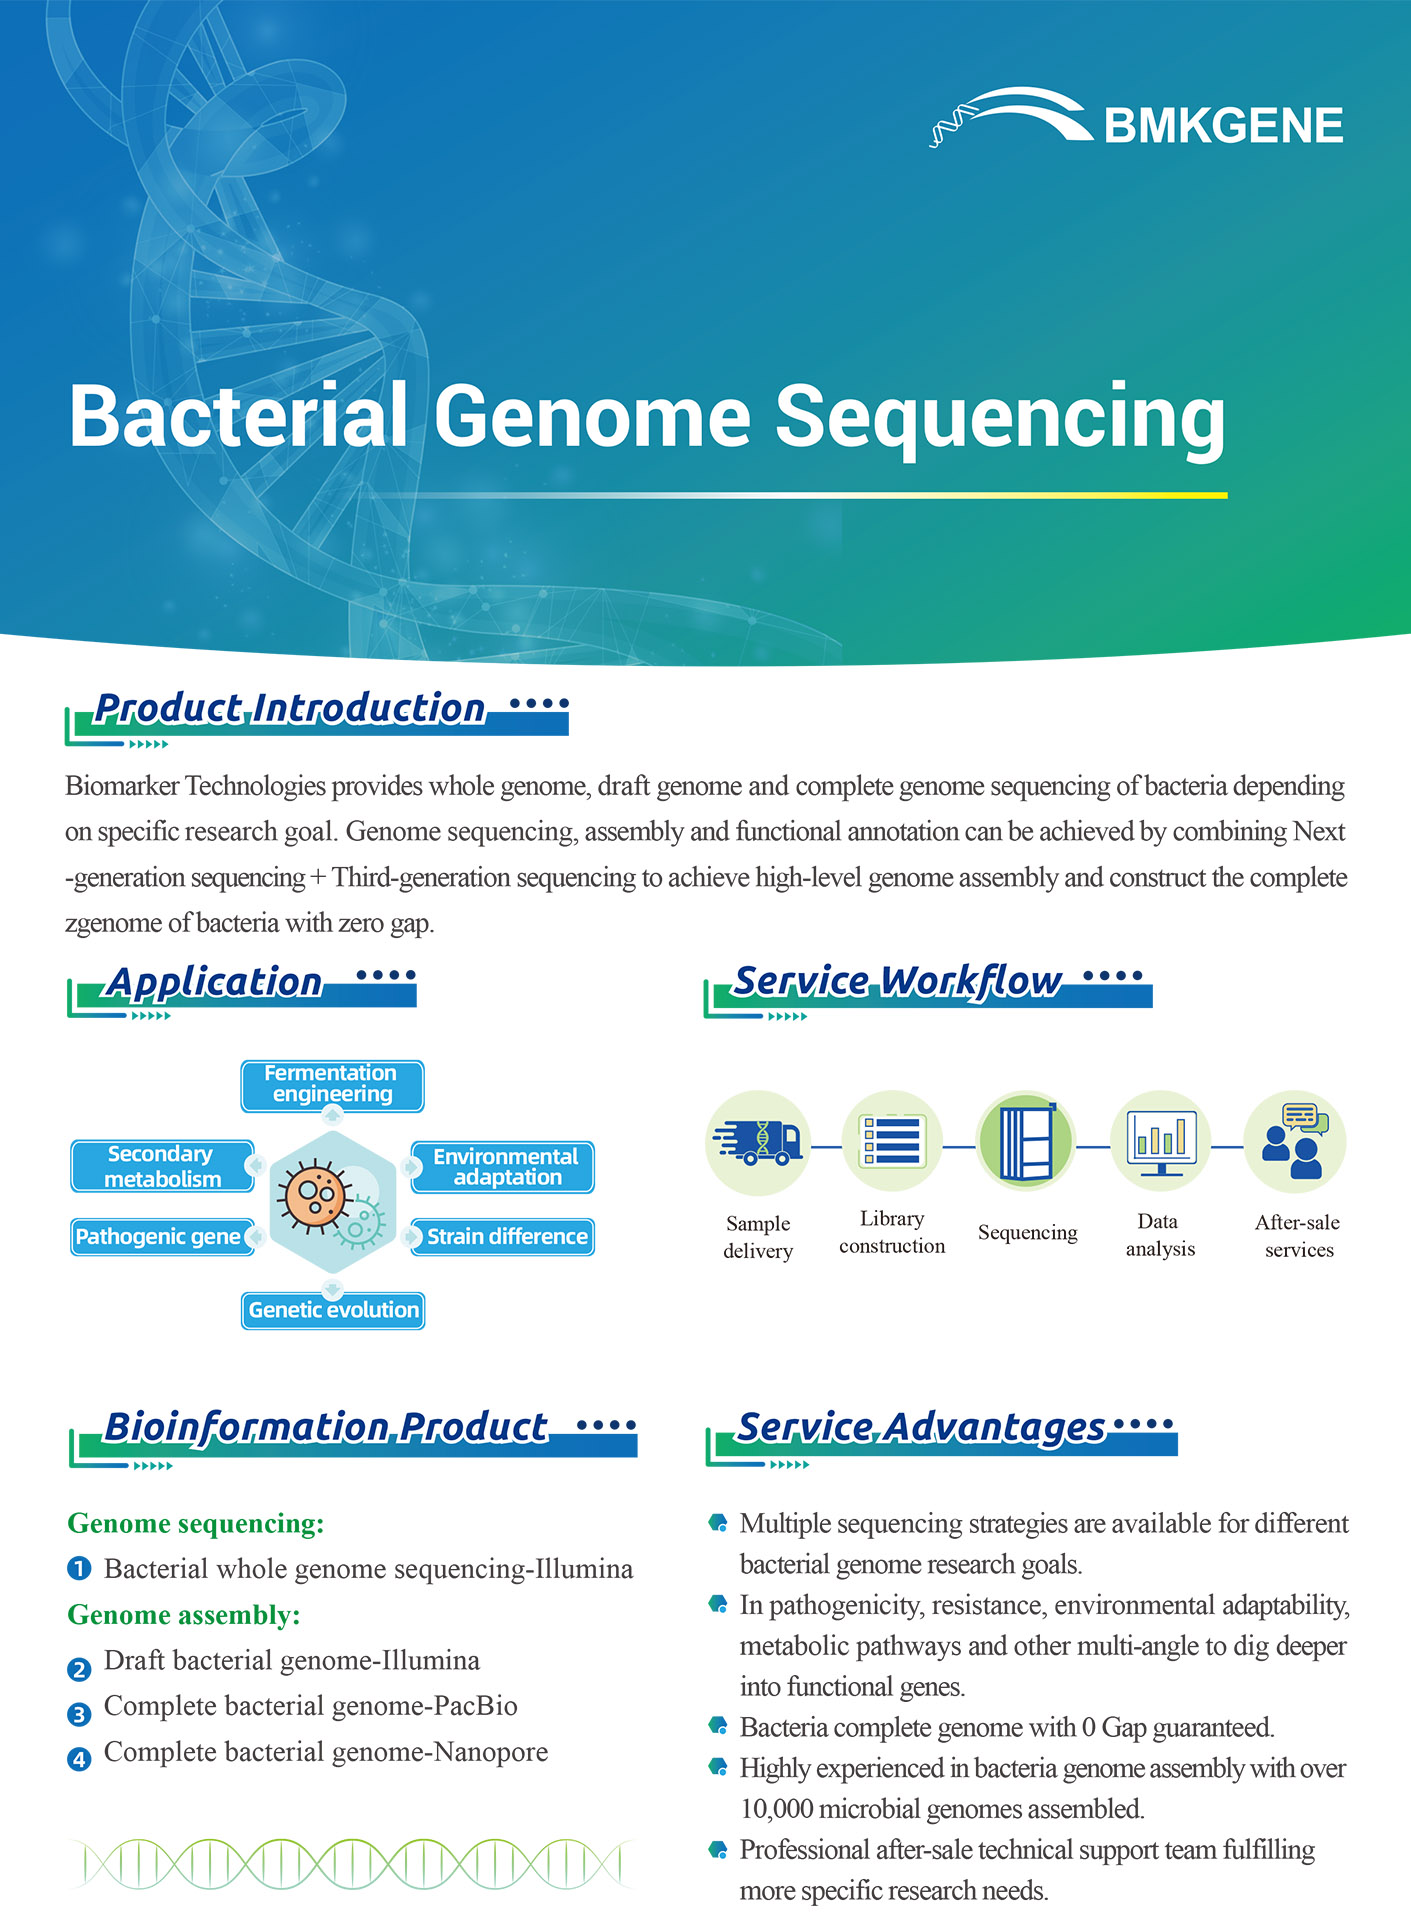 http://www.bmkgene.com/uploads/Bacterial-Genome-Sequencing-BMKGENE-2023.124.pdf